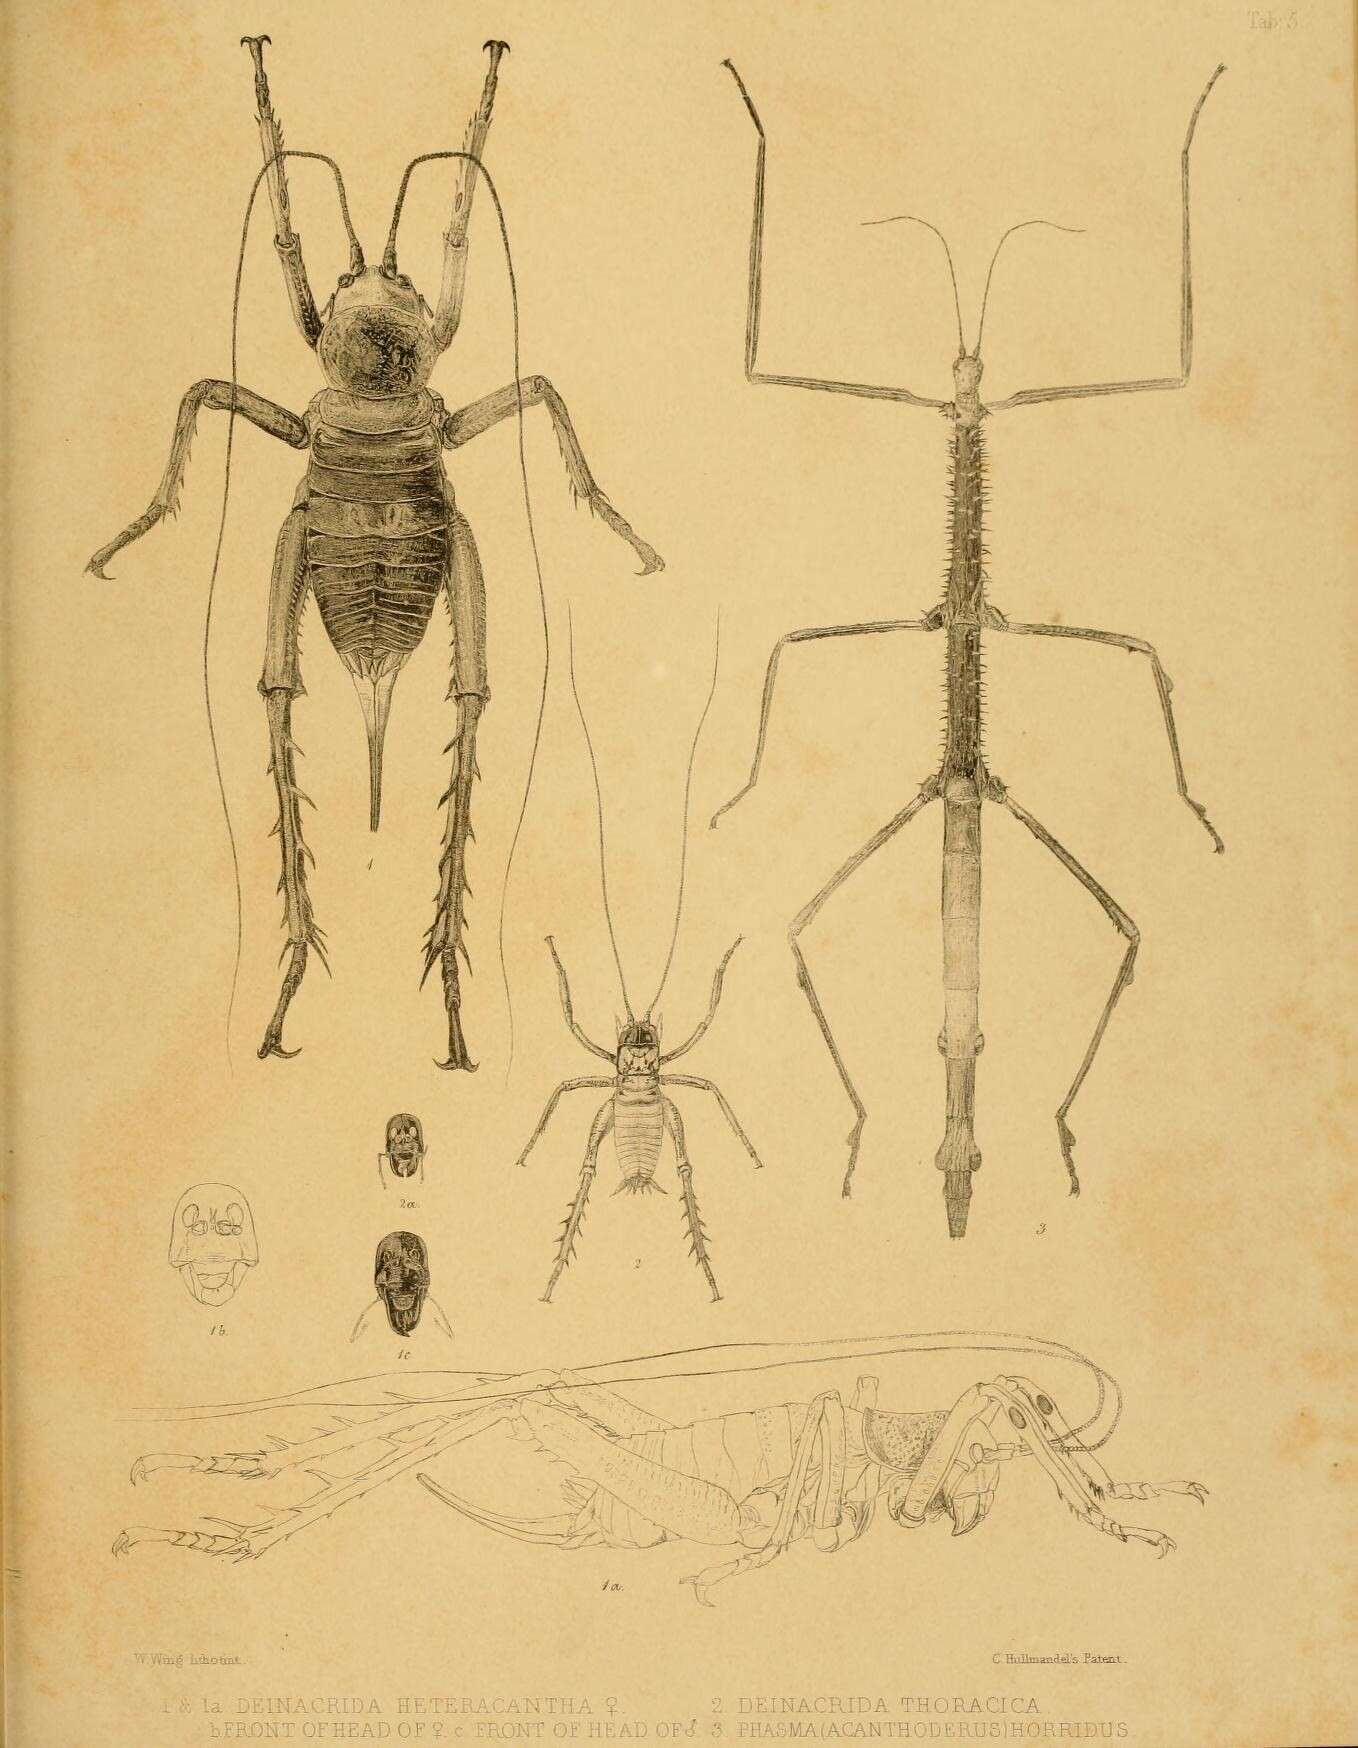 Plancia ëd Hemideina thoracica (White & A. 1846)